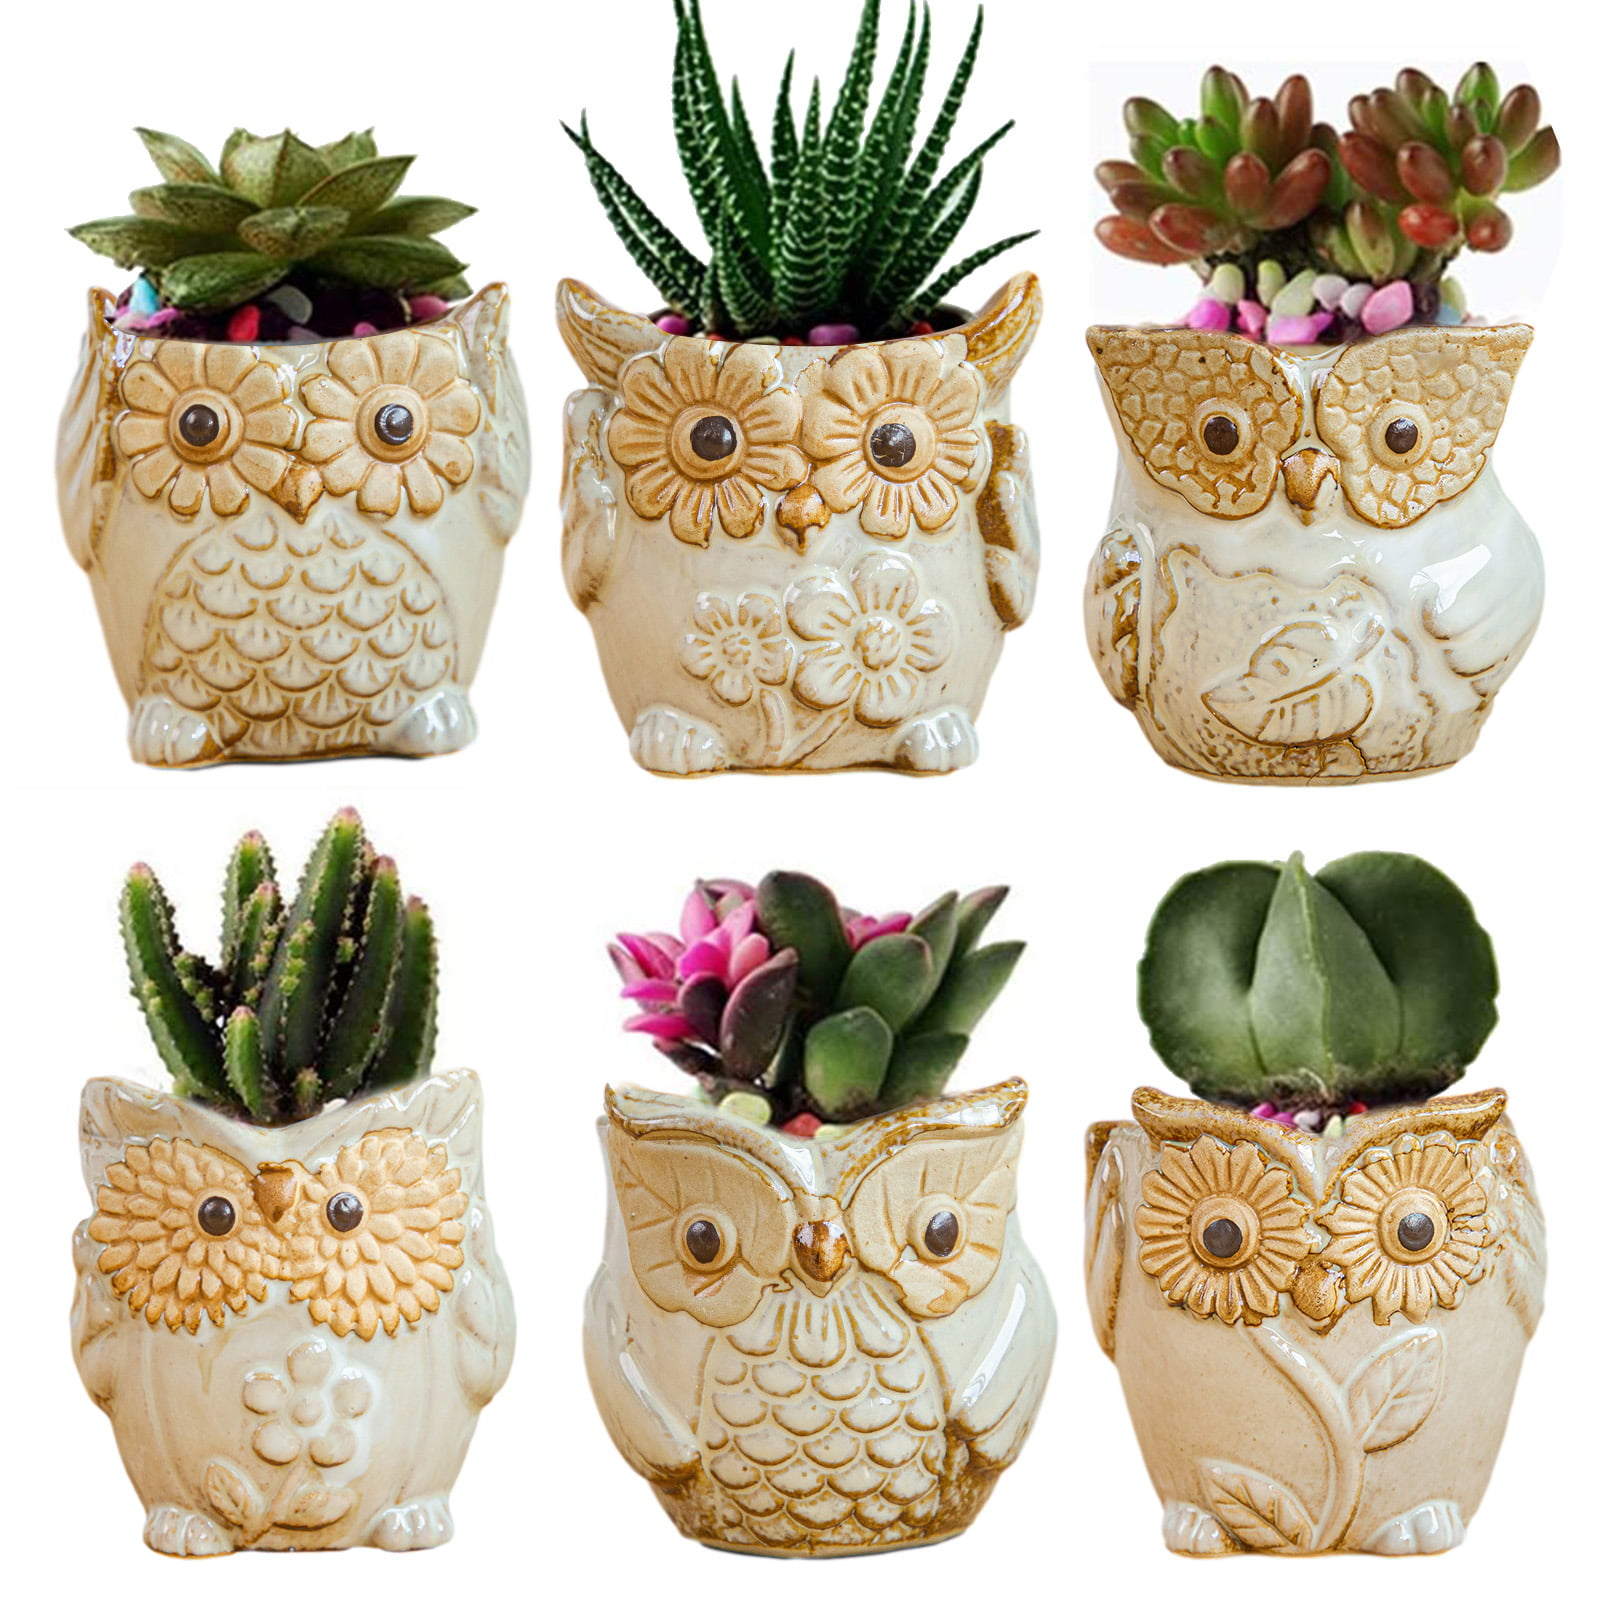 Details about   Hand Carved Ceramic Vase High Quality Porcelain Flower Pots For Home Decorations 